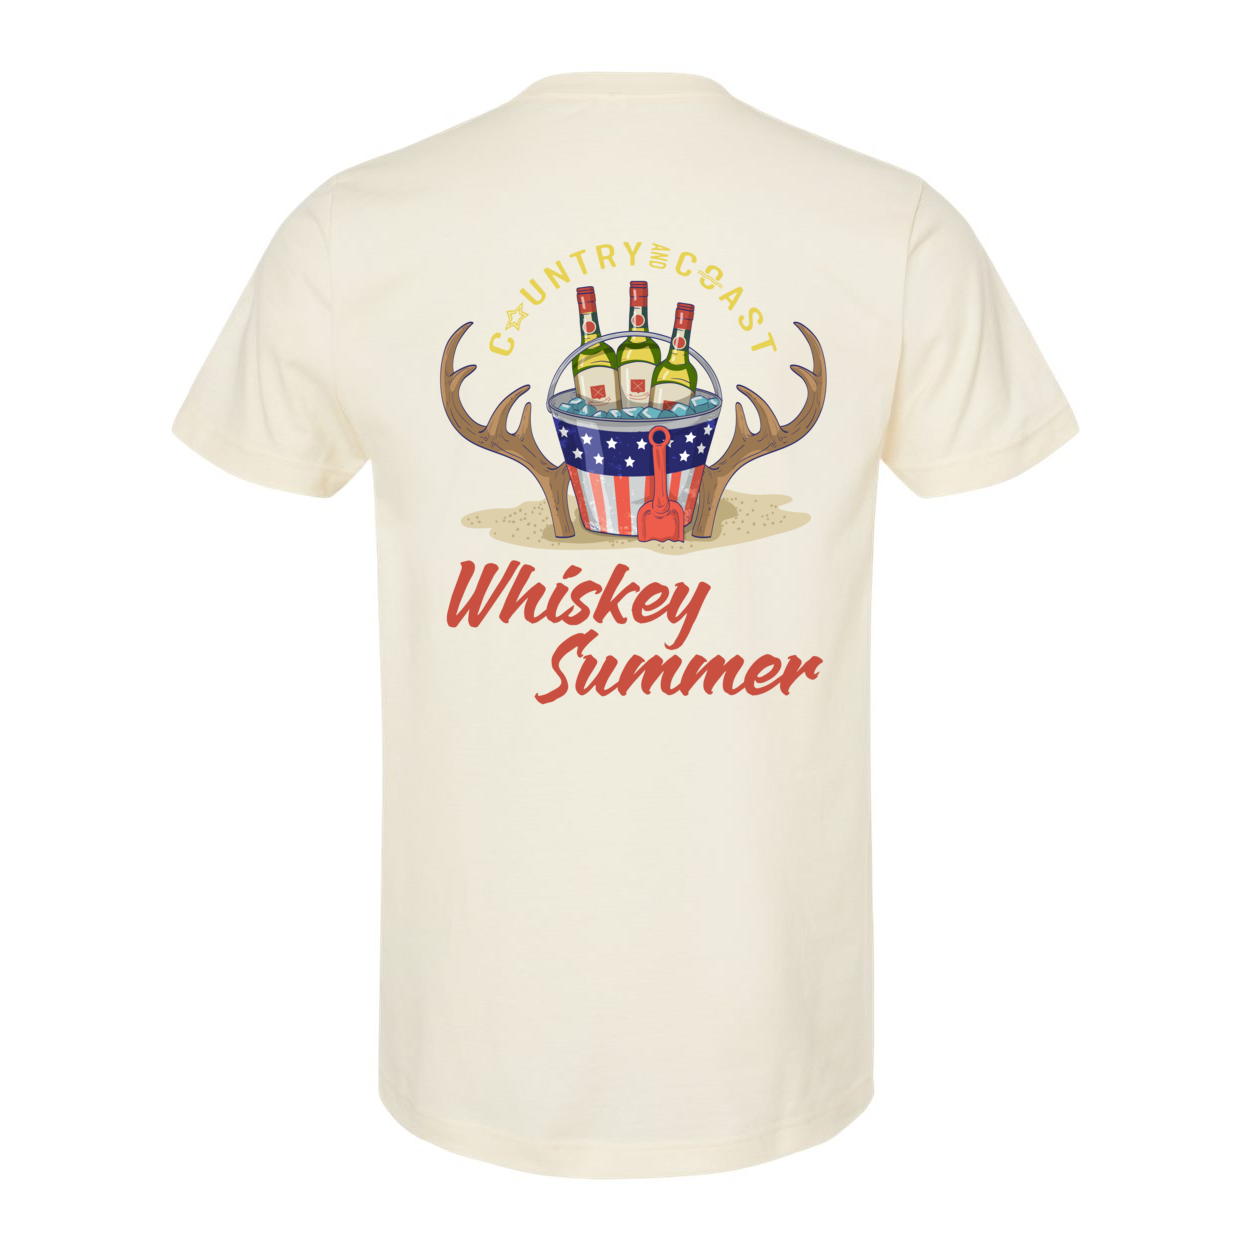 Whiskey Summer